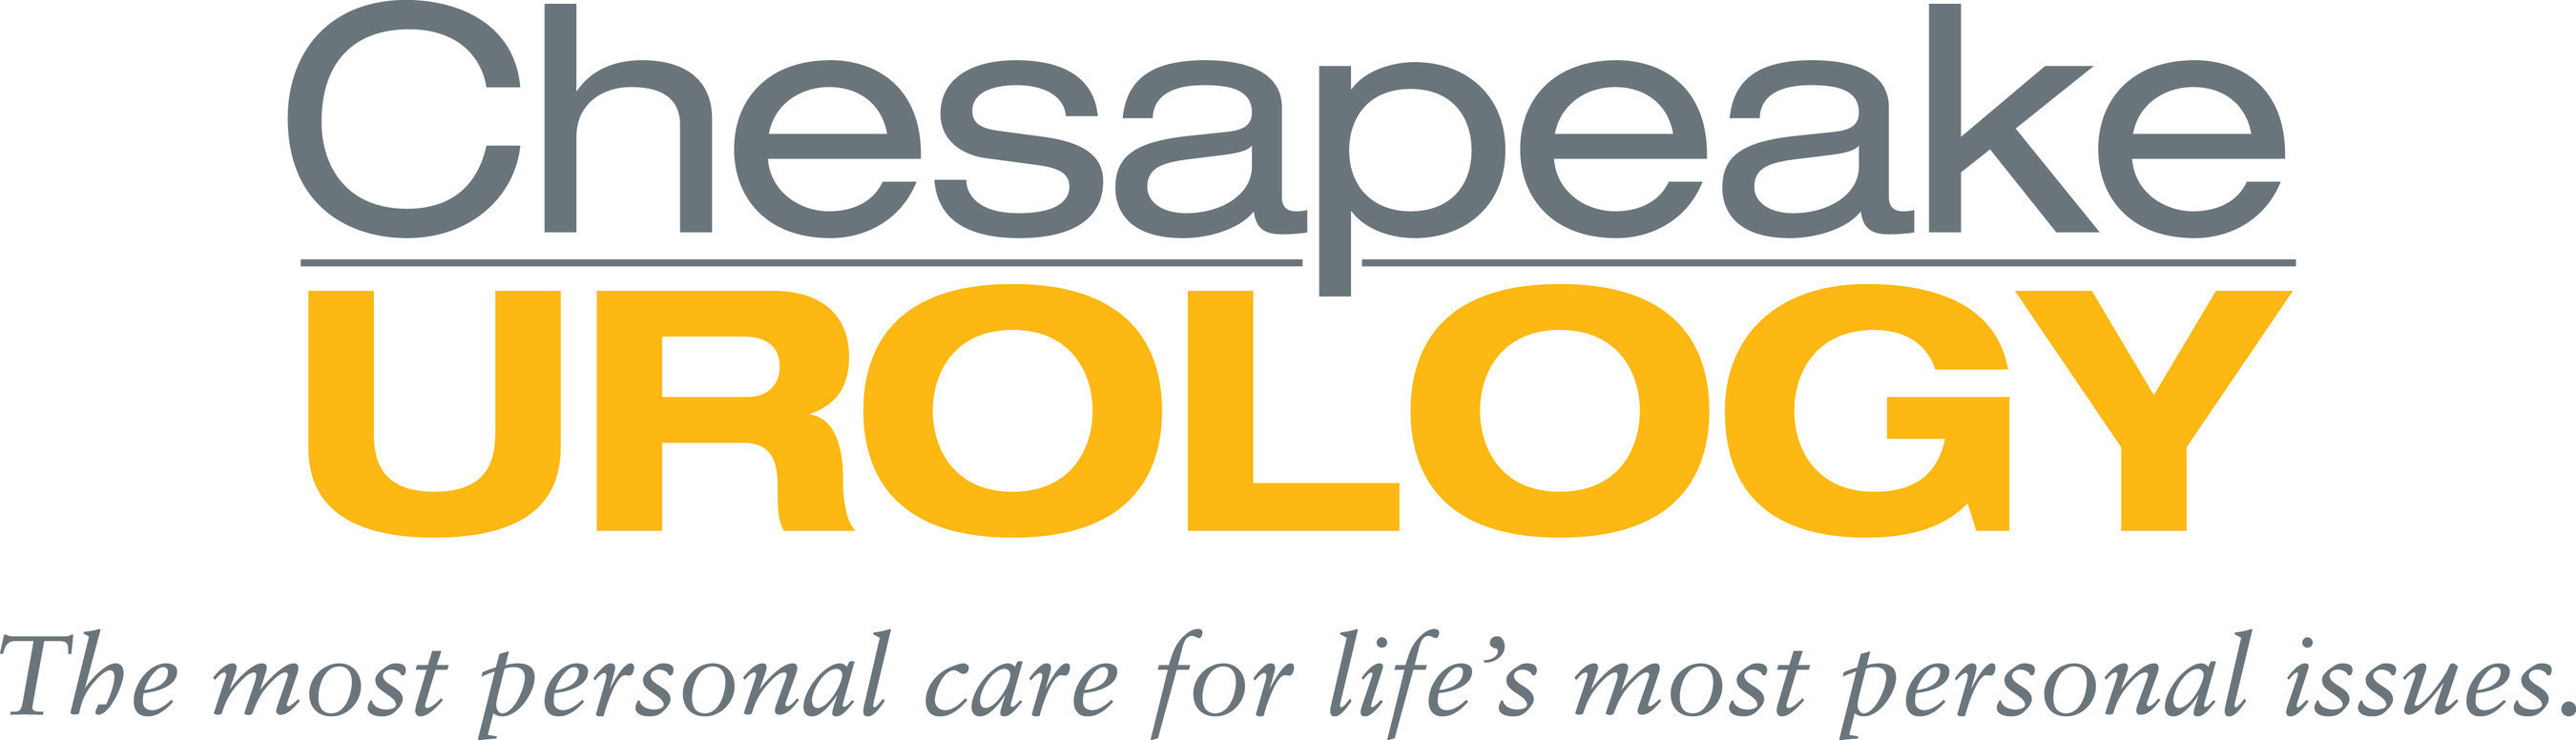 Chesapeake Urology logo